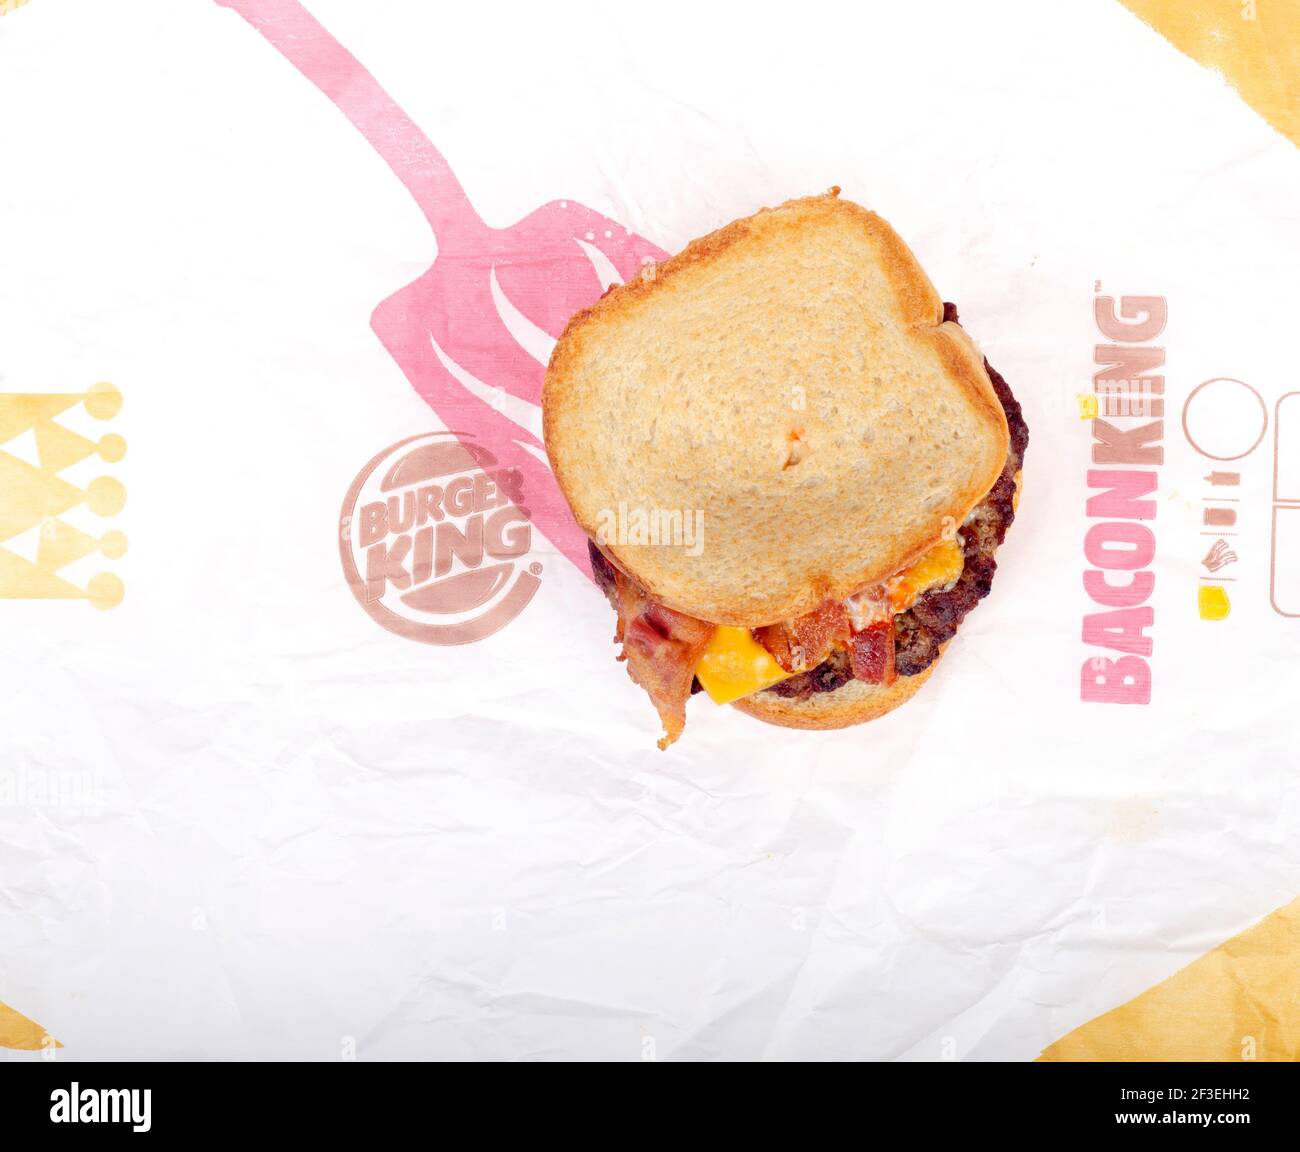 Burger King Bacon King Sourdough Cheeseburger Sandwich on Wrapper Stock Photo